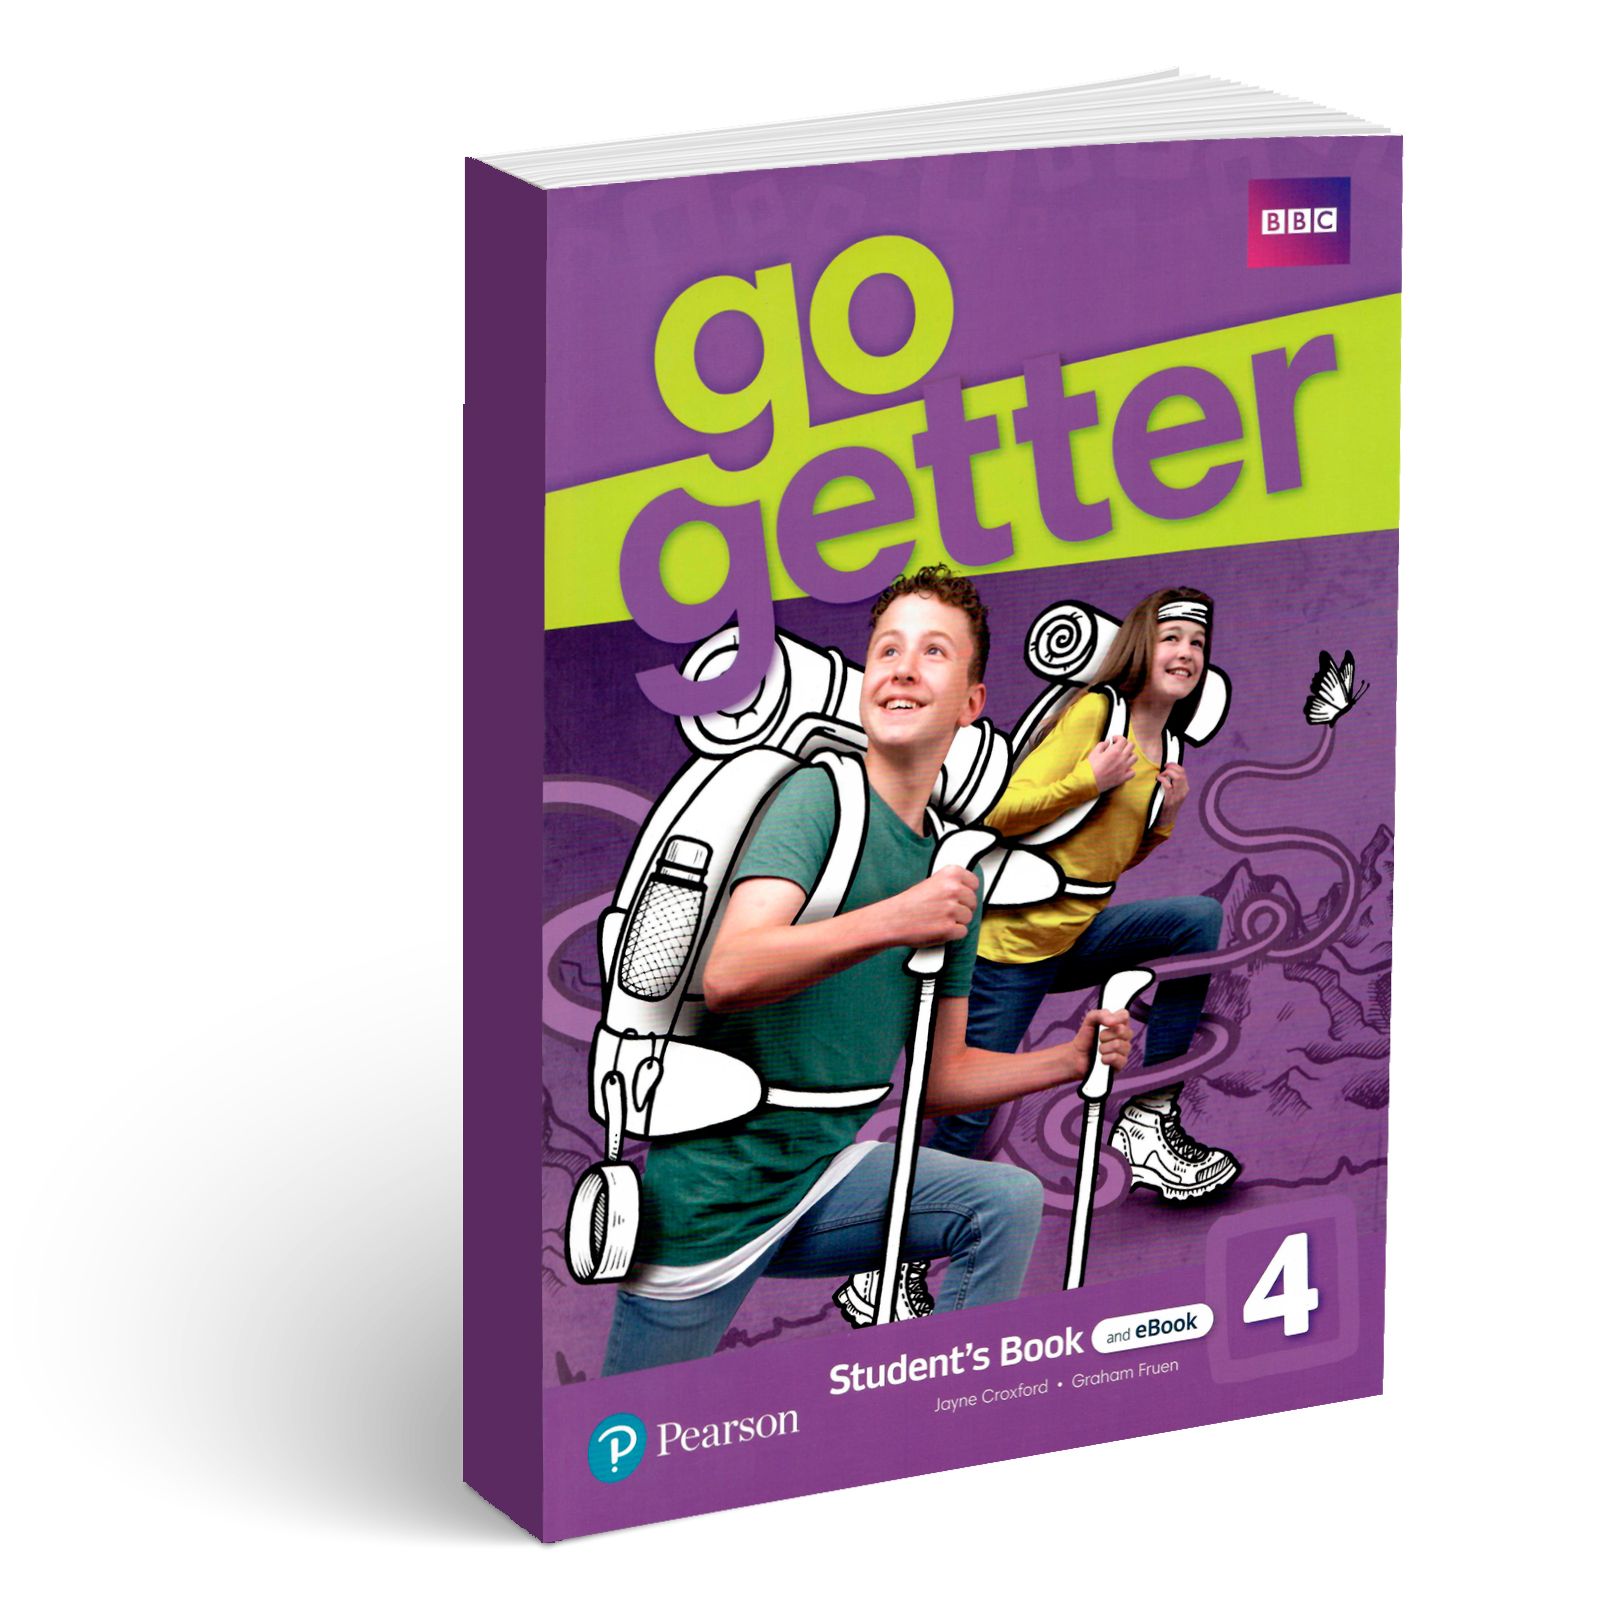 Go getter 3 страница 3. Go Getter 4 Workbook. Учебник go Getter 4. Go Getter 1 student's book. Go Getter 4 ответы.